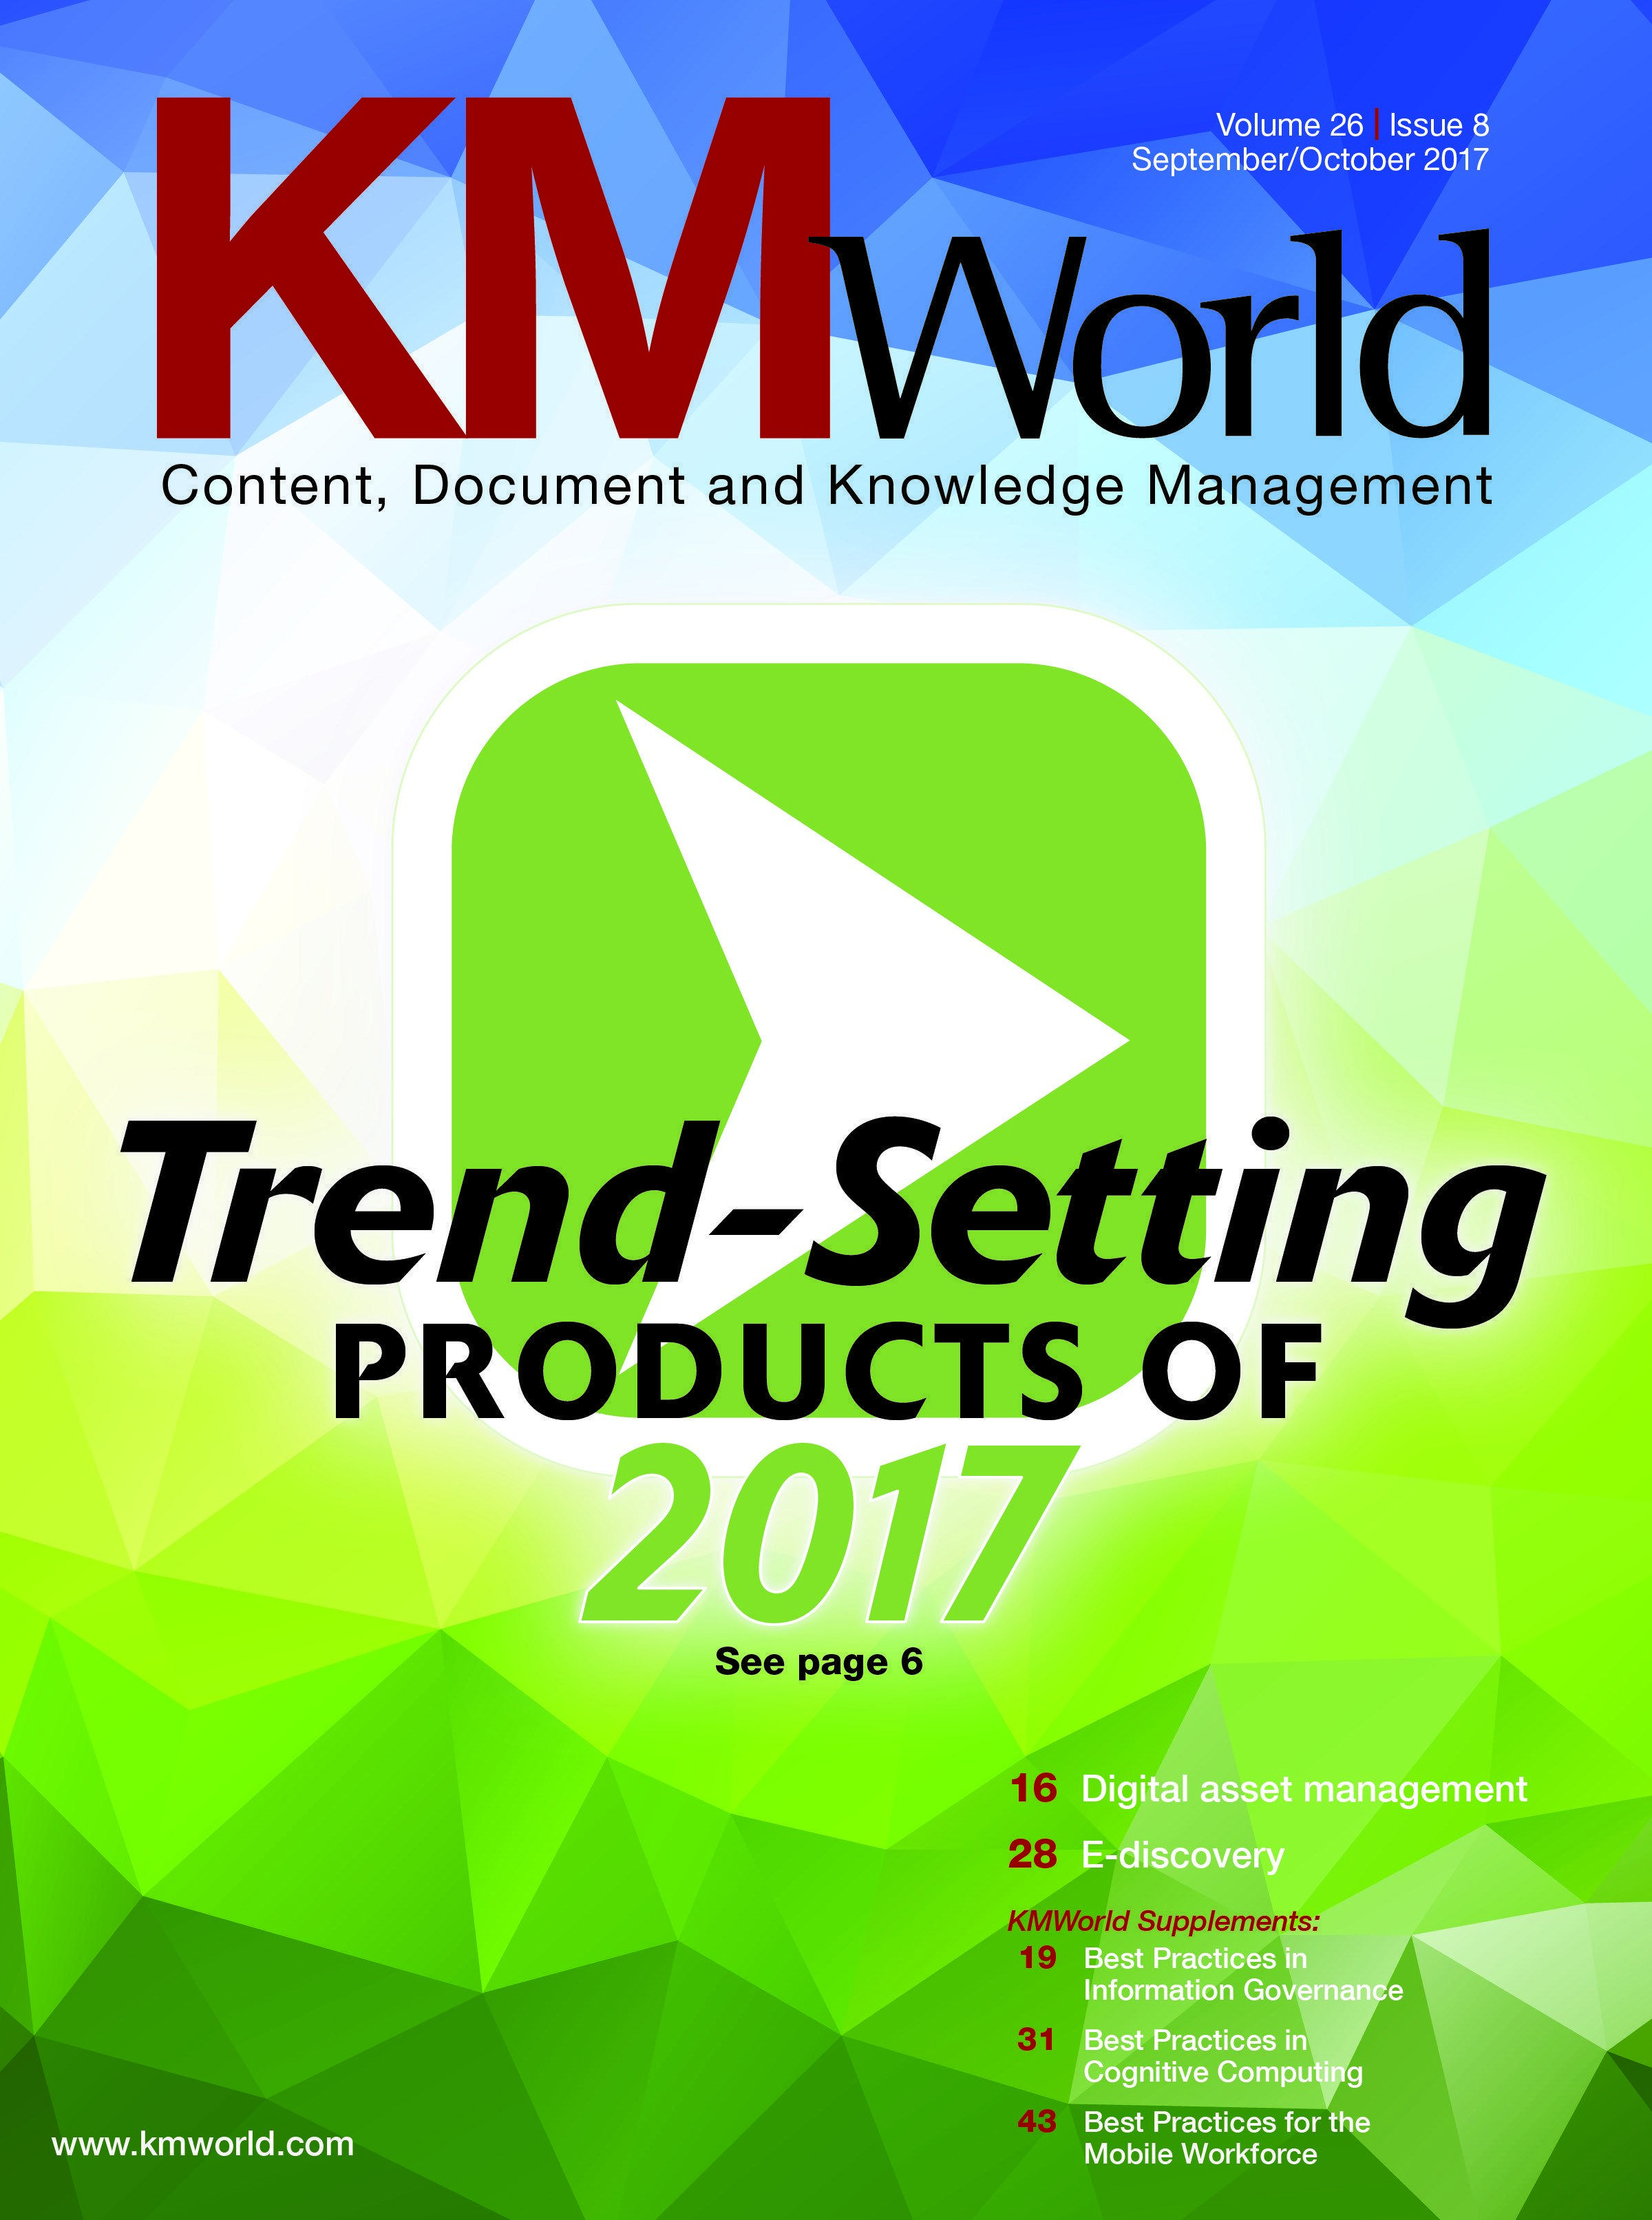 KMWorld Logo - KMWorld Trend-Setting Products of 2017 - KMWorld Magazine